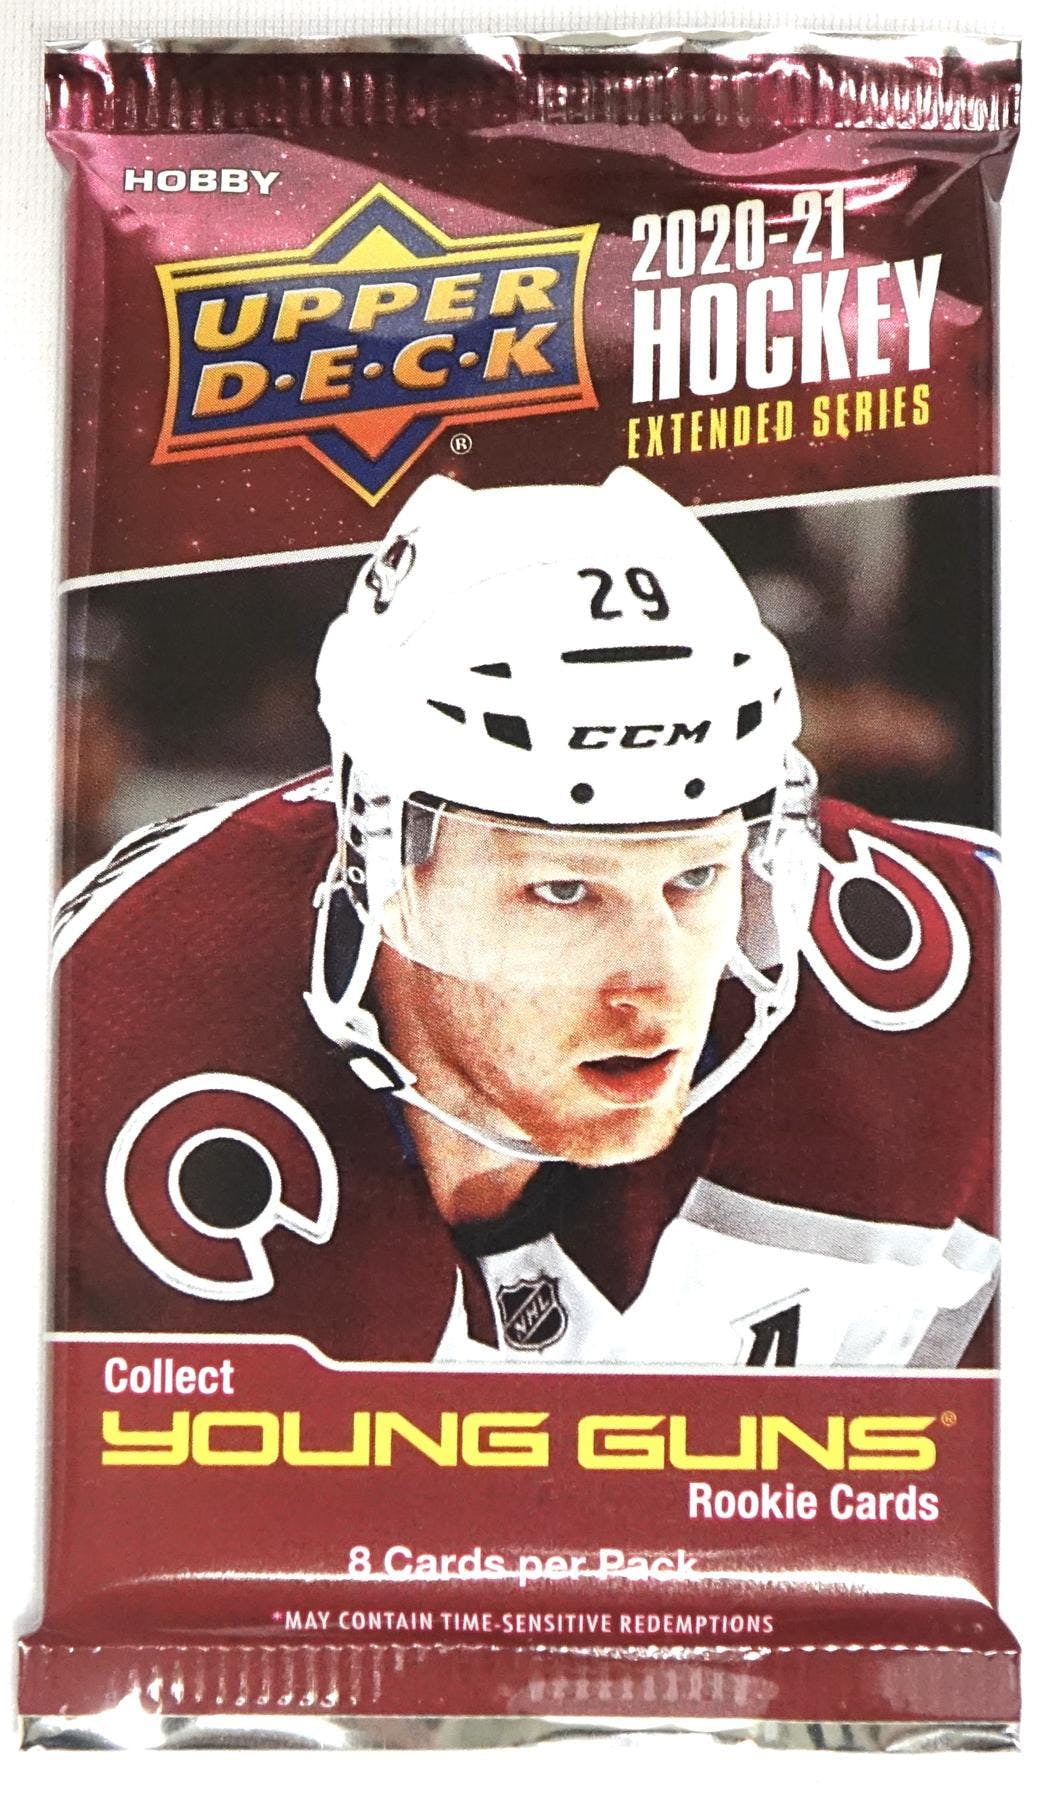 2020-21 Upper Deck Hockey Extended Series Hobby Box 24 Packs 8 Cards per  Pack - Walmart.com